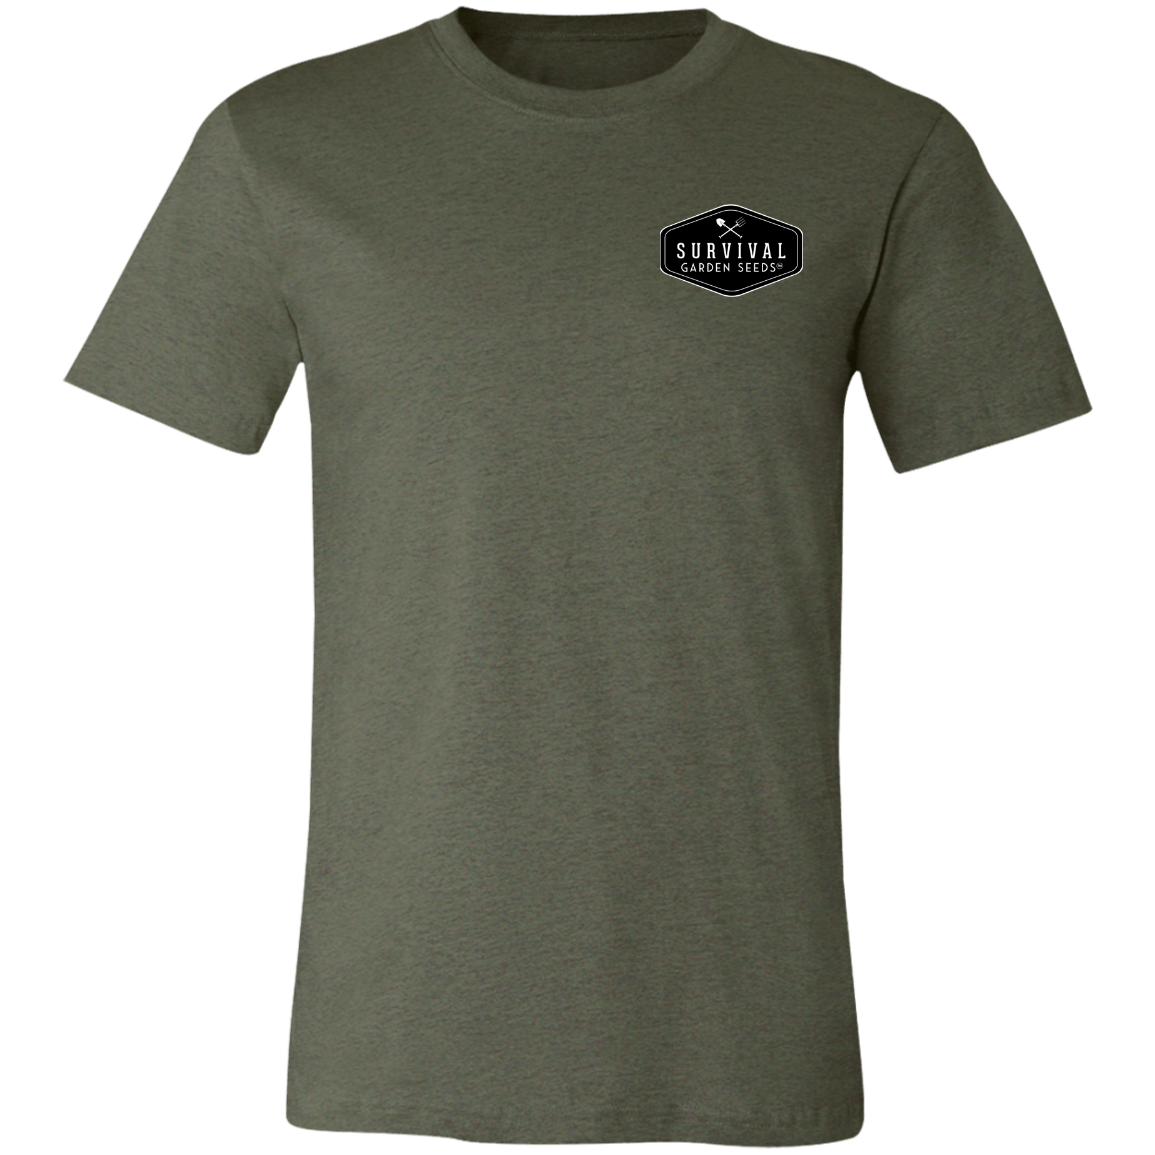 Unisex Short-Sleeve T-Shirt - SGS Logo/Grow. Eat. Survive.